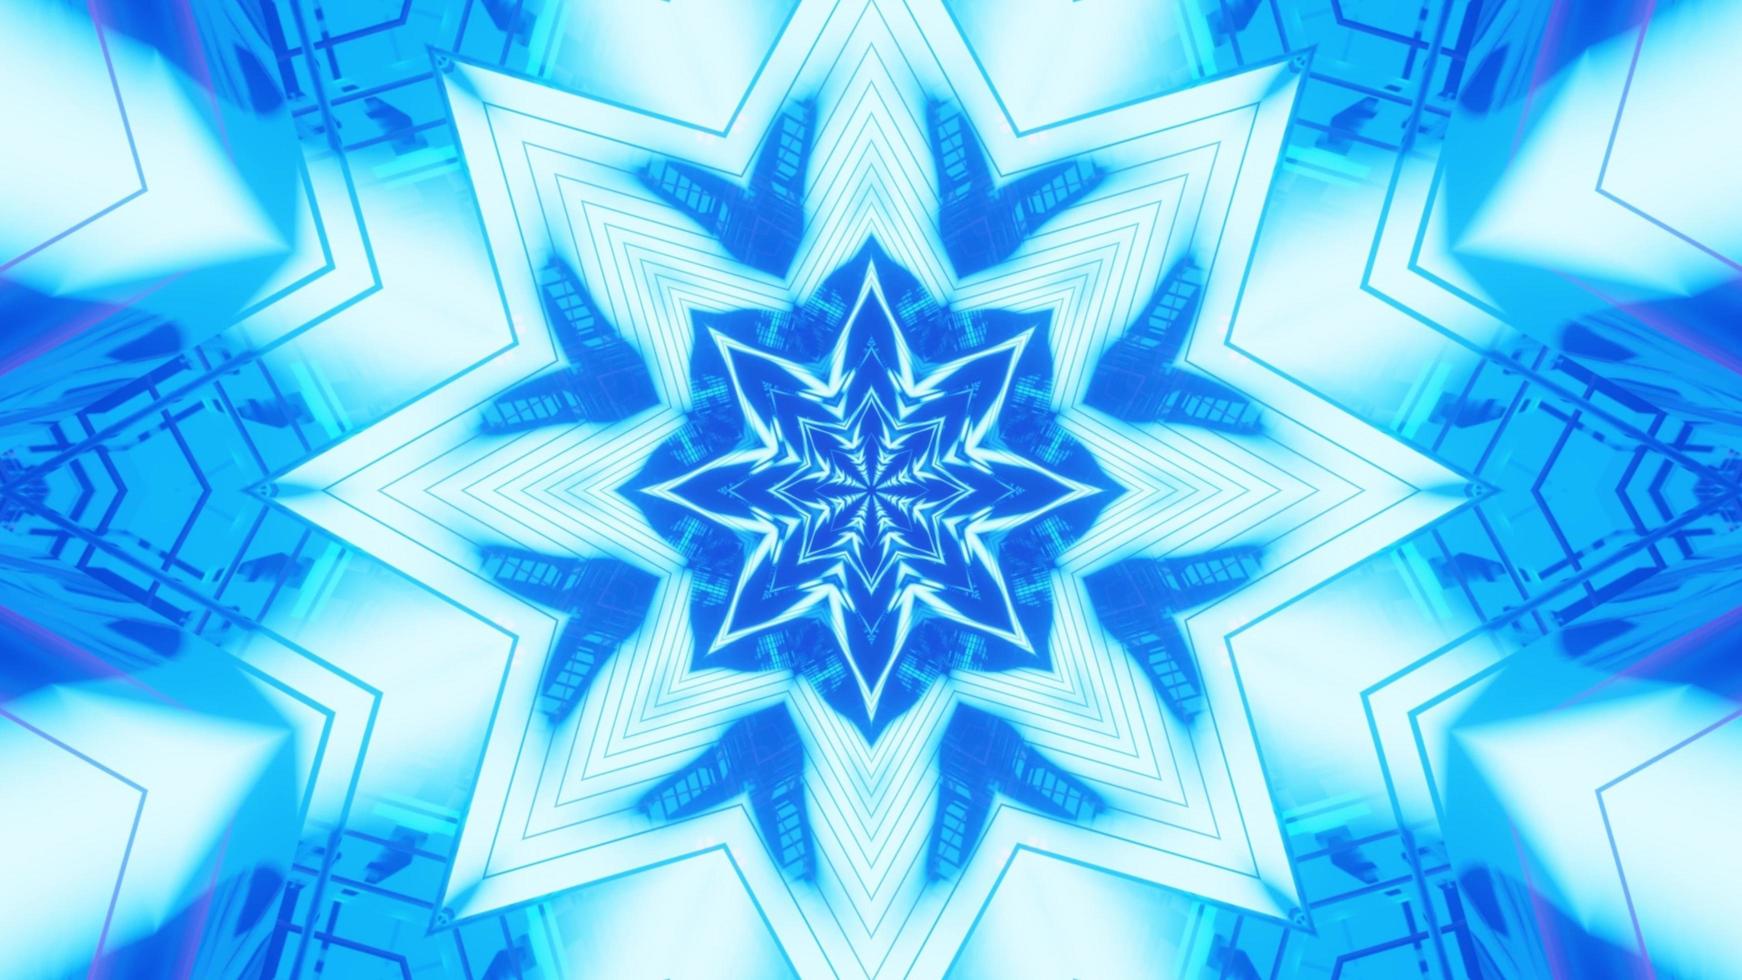 Bright blue abstract ornament 4K UHD 3D illustration photo